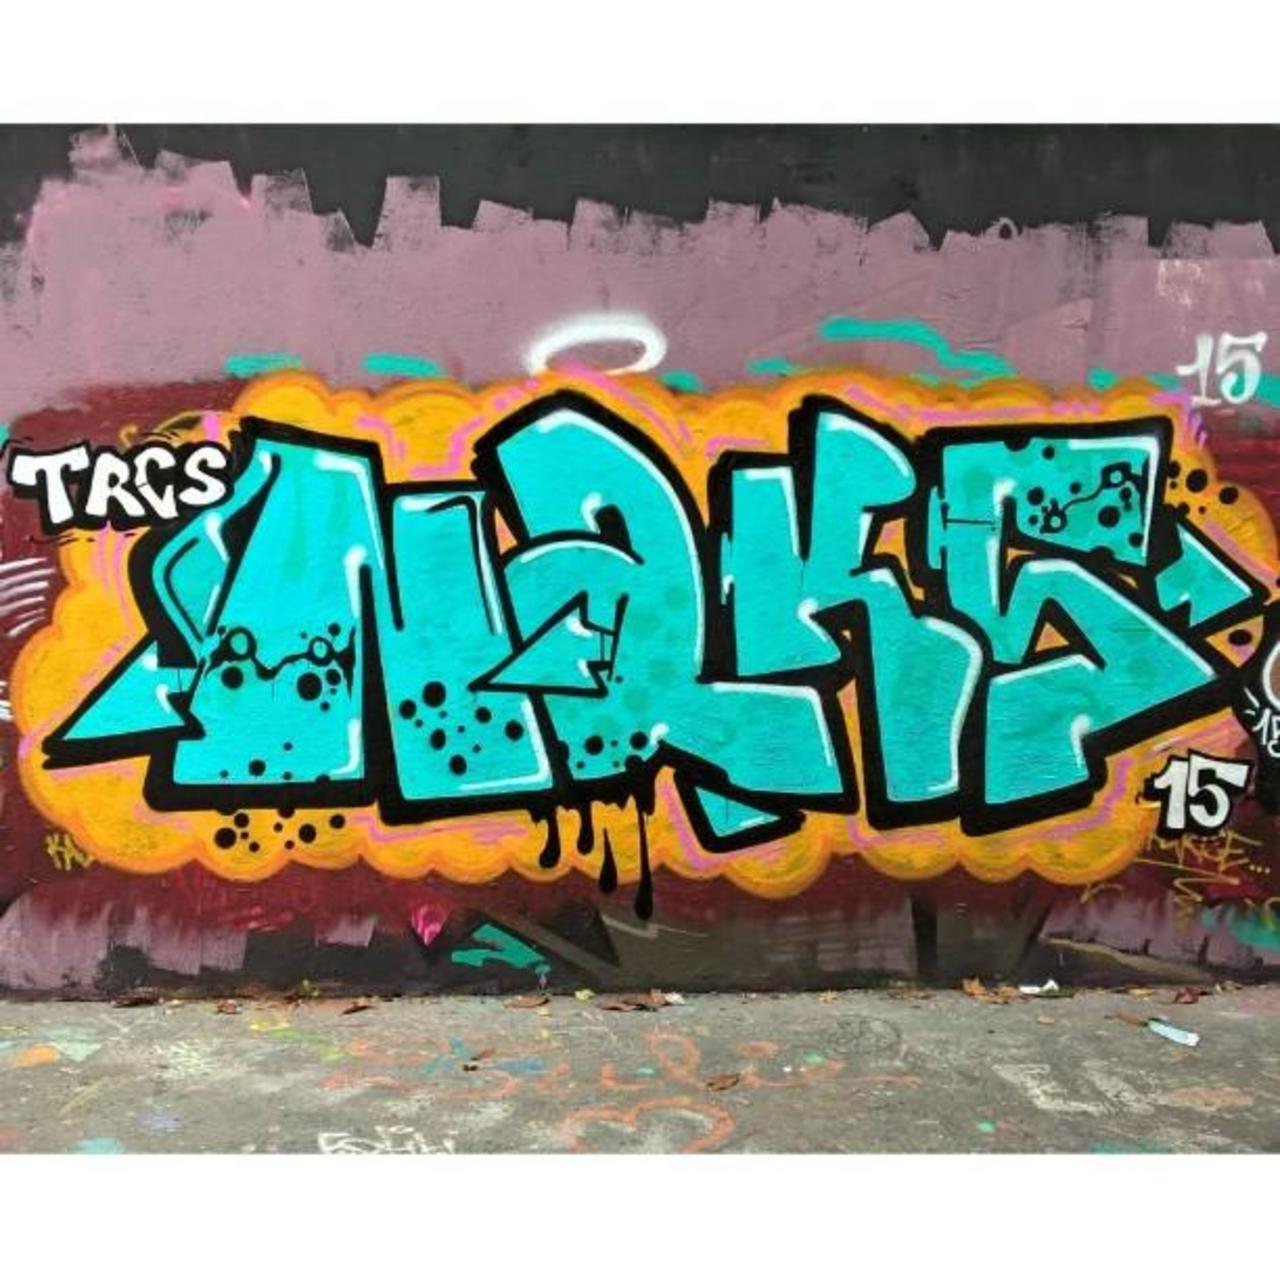 NAKS
#streetart #graffiti #graff #art #fatcap #bombing #sprayart #spraycanart #wallart #handstyle #lettering #urban… http://t.co/gy7lf9nNGy